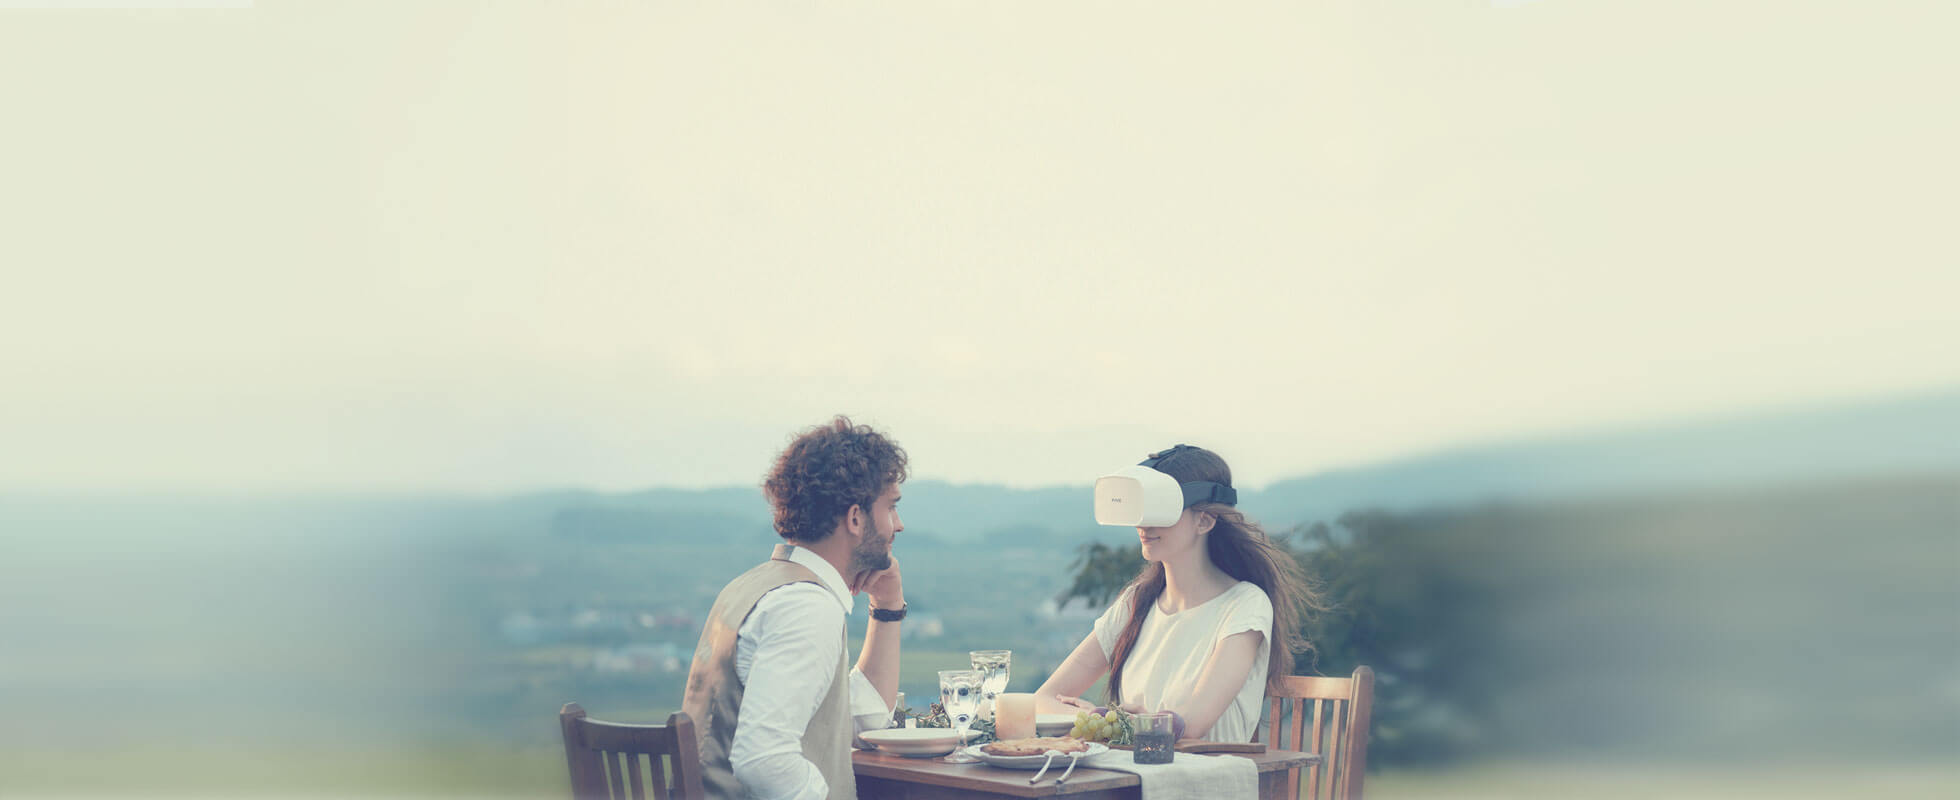 Eyetracking virtual reality headset FOVE Secures $6 Million